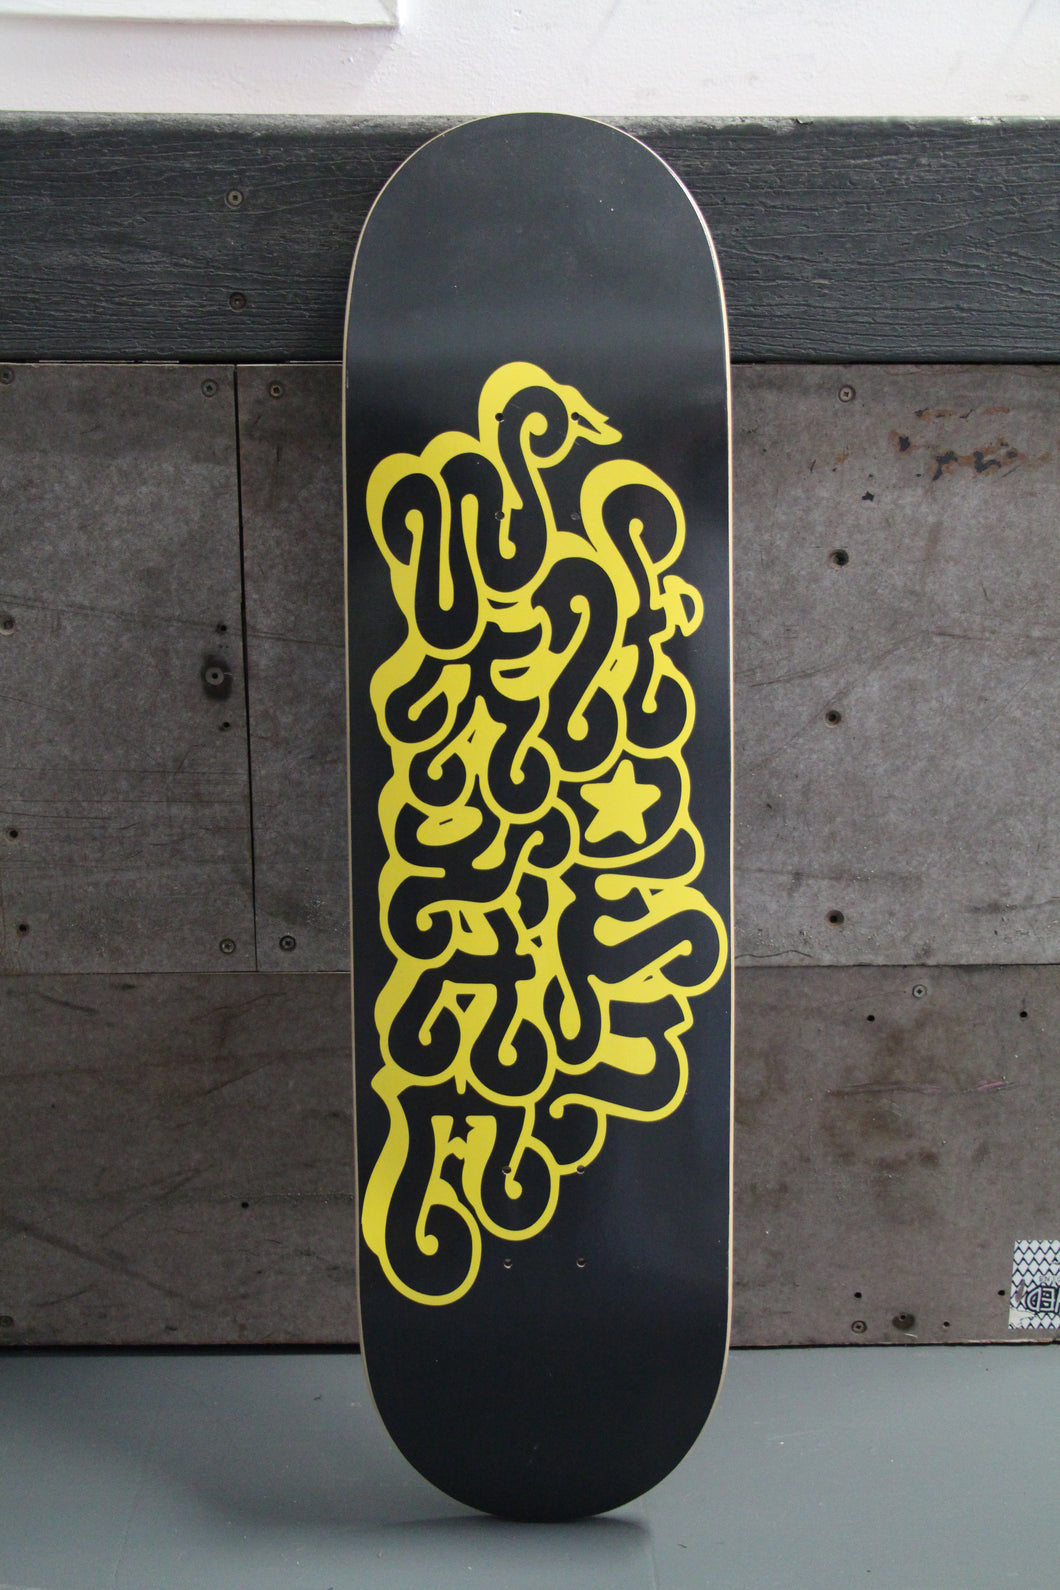 8.5 Graff skateboardd deck